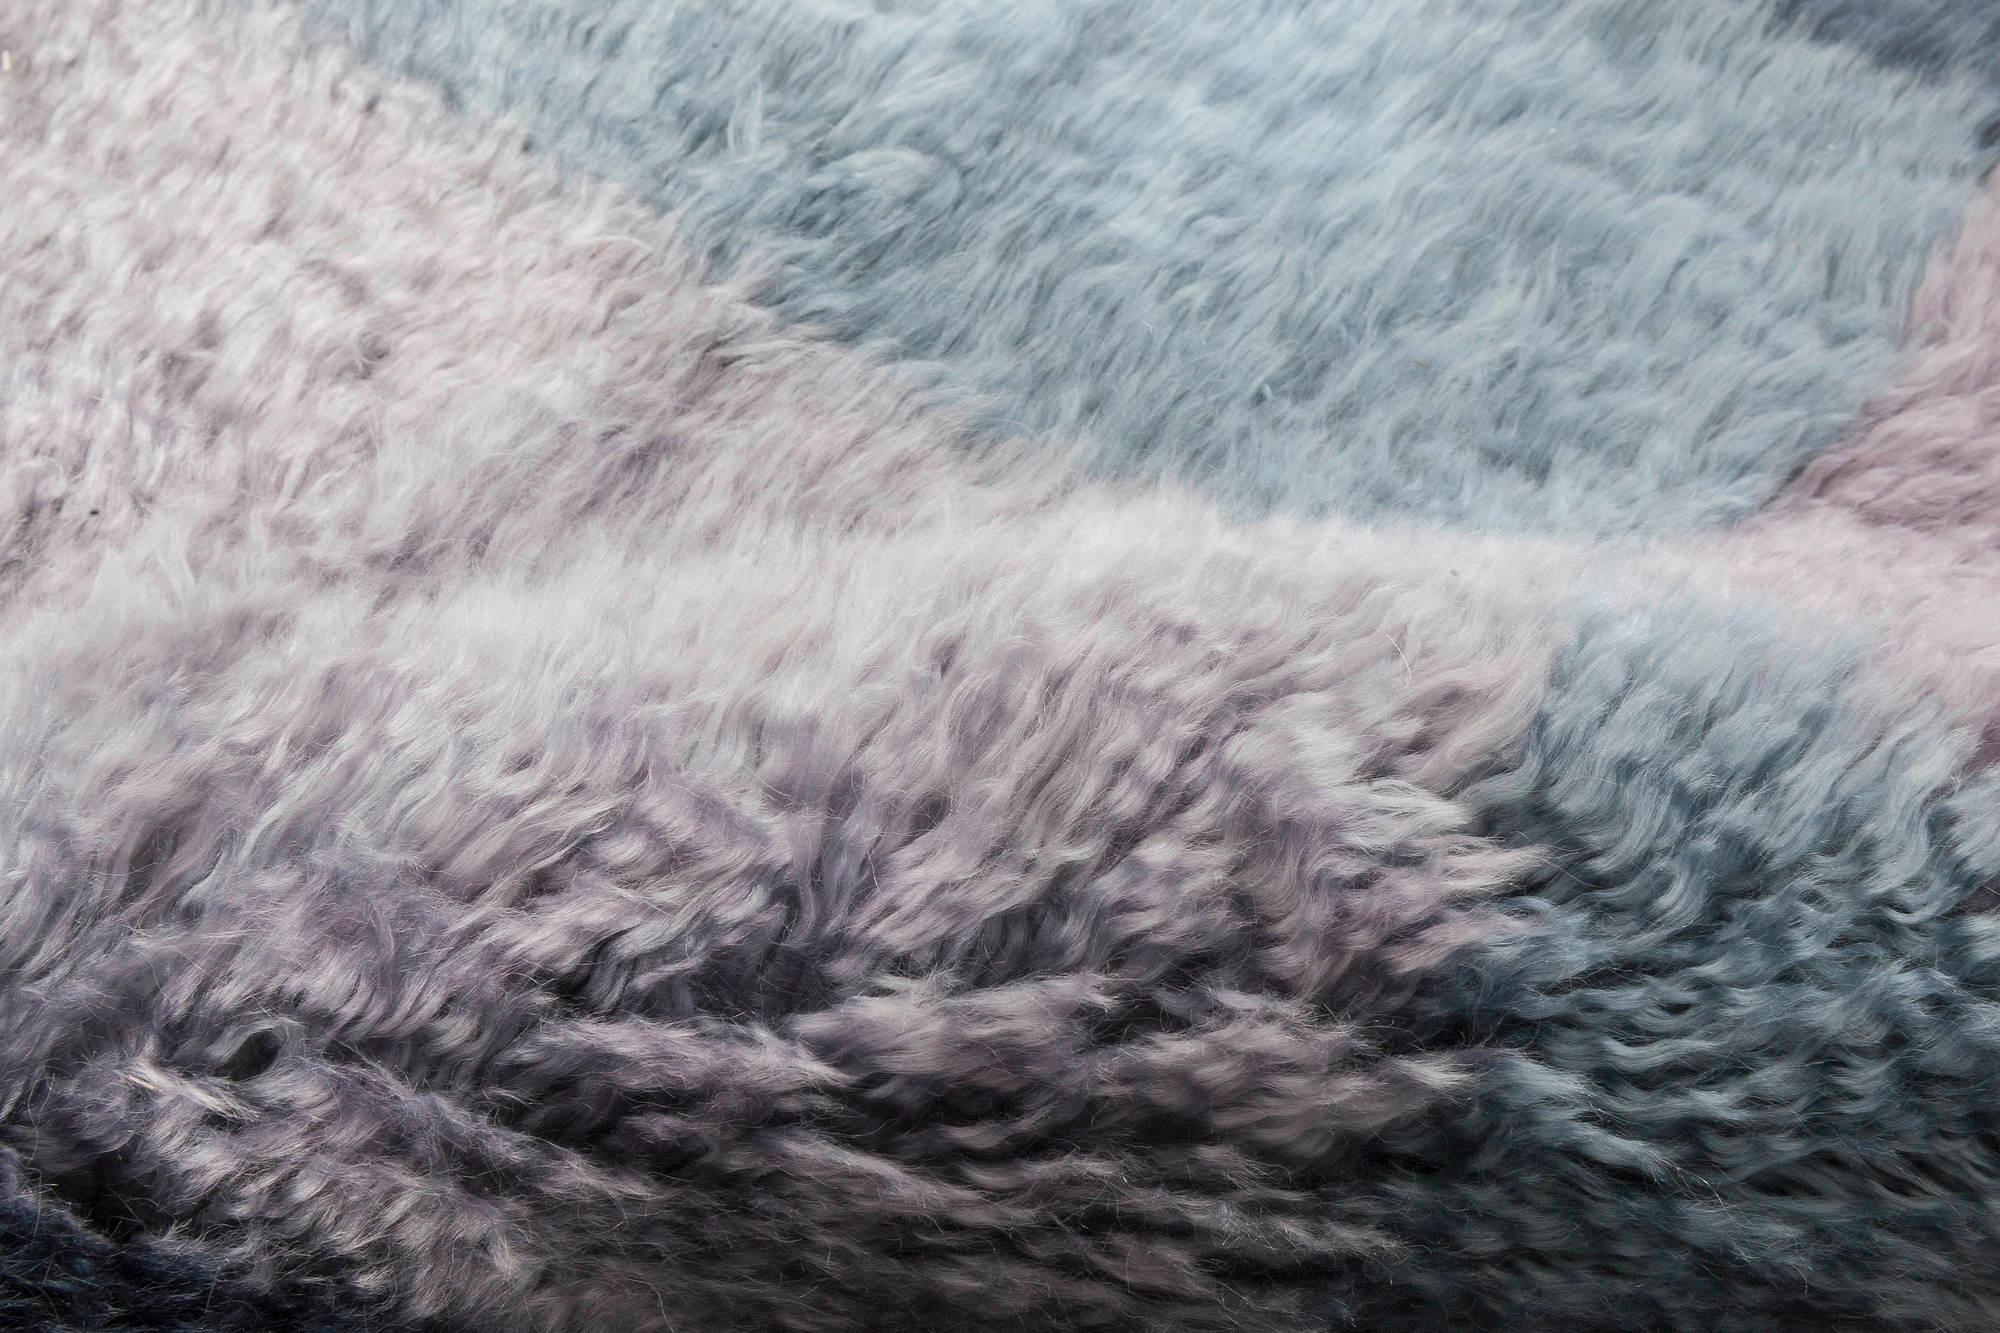 Contemporary bluebell Swedish rya design handmade rug by Doris Leslie Blau
Size: 2'8